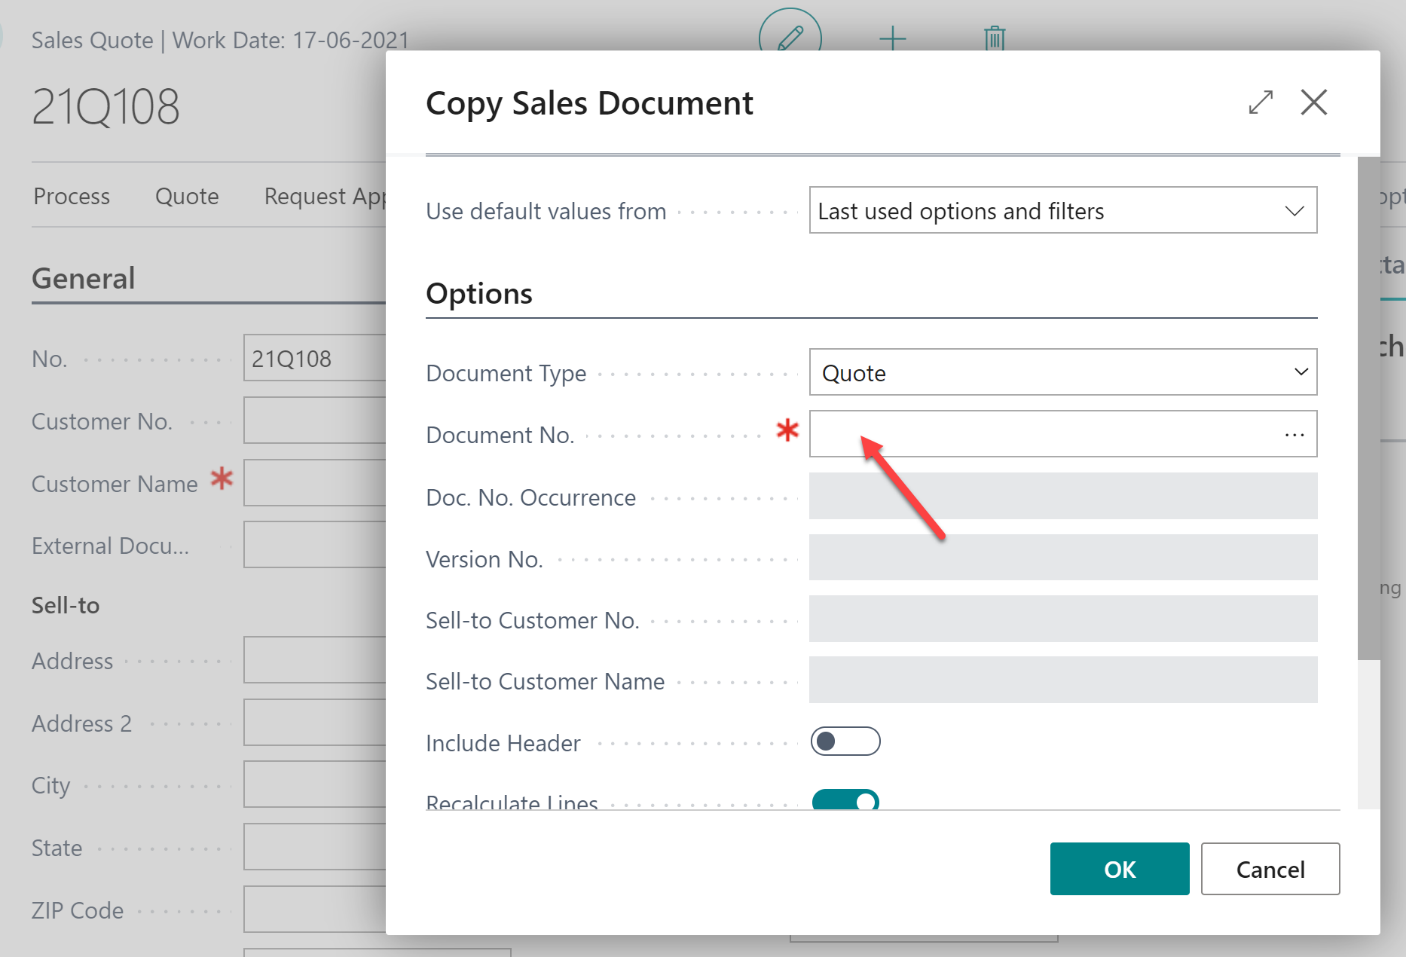 Copy Sales Document